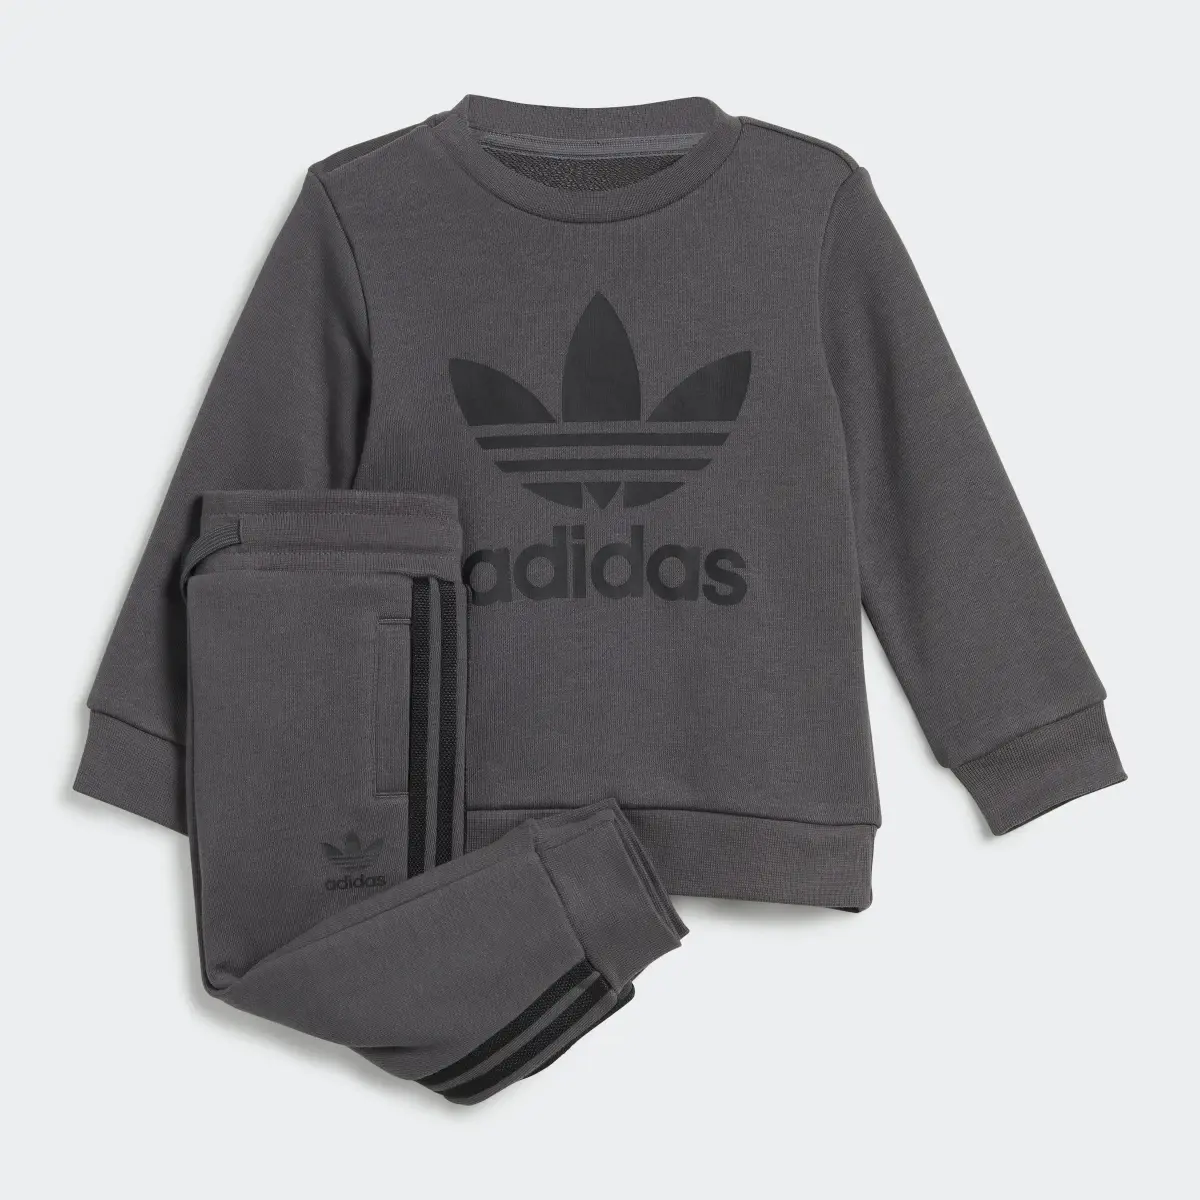 Adidas Adicolor Crew Sweatshirt Set. 2